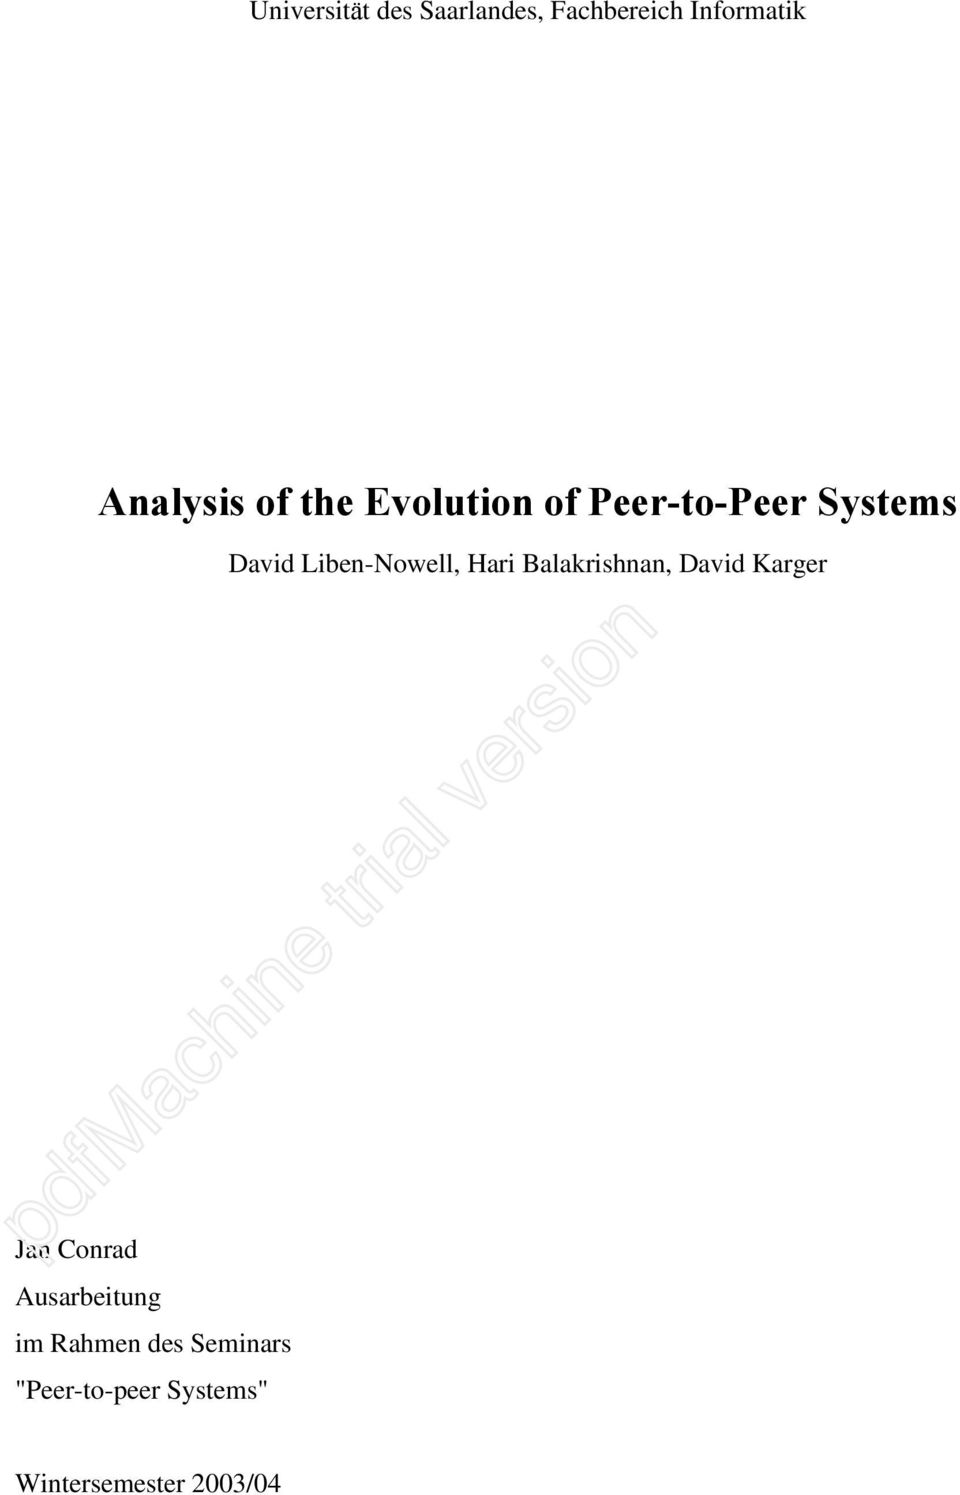 Ausarbeitung im Rahmen des Seminars "Peer-to-peer Systems"